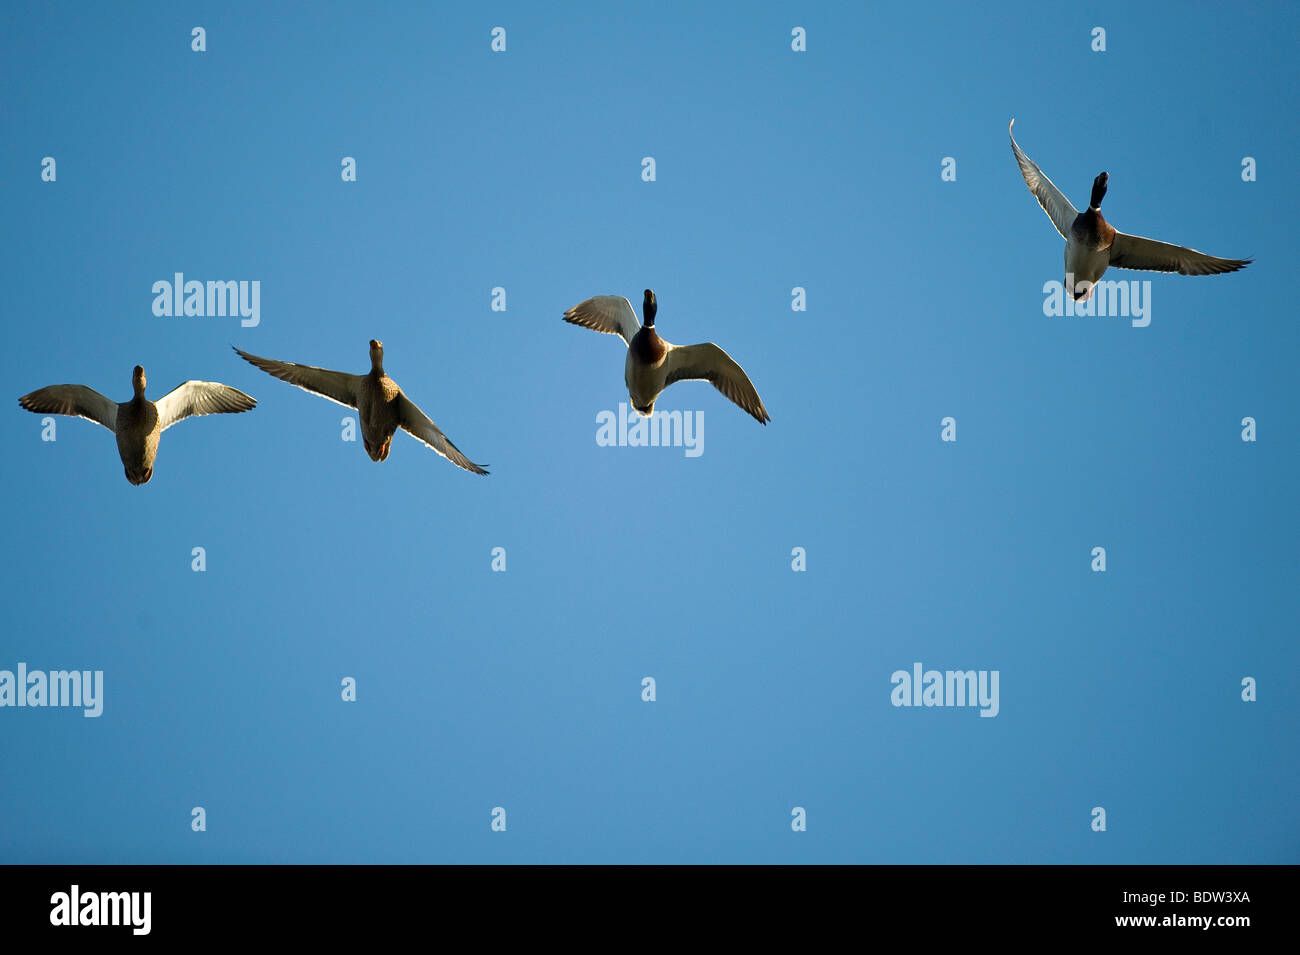 Four ducks in flight Stock Photo